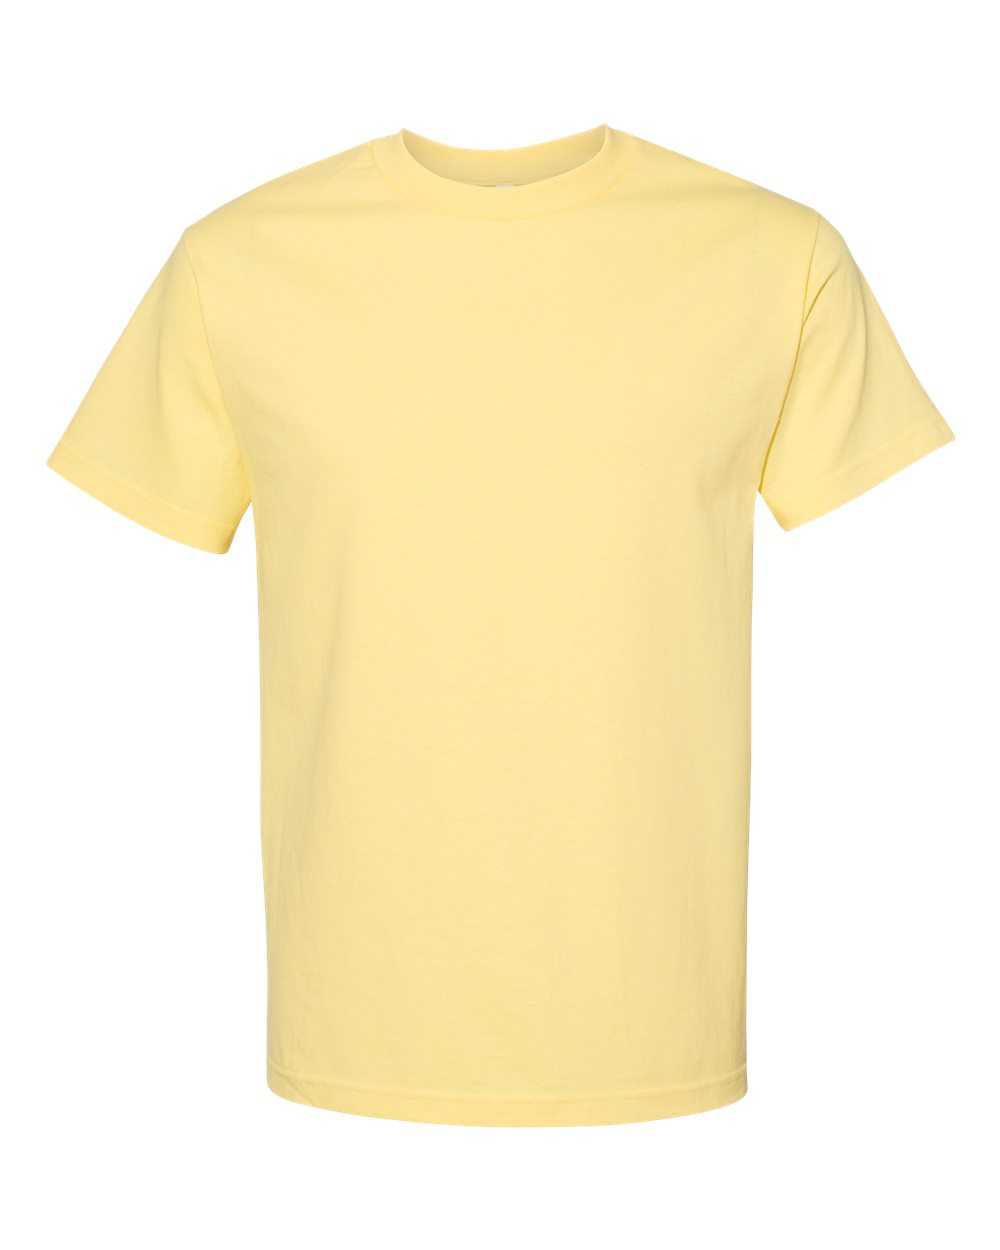 American Apparel 1301 Unisex Heavyweight Cotton T-Shirt - Banana - HIT a Double